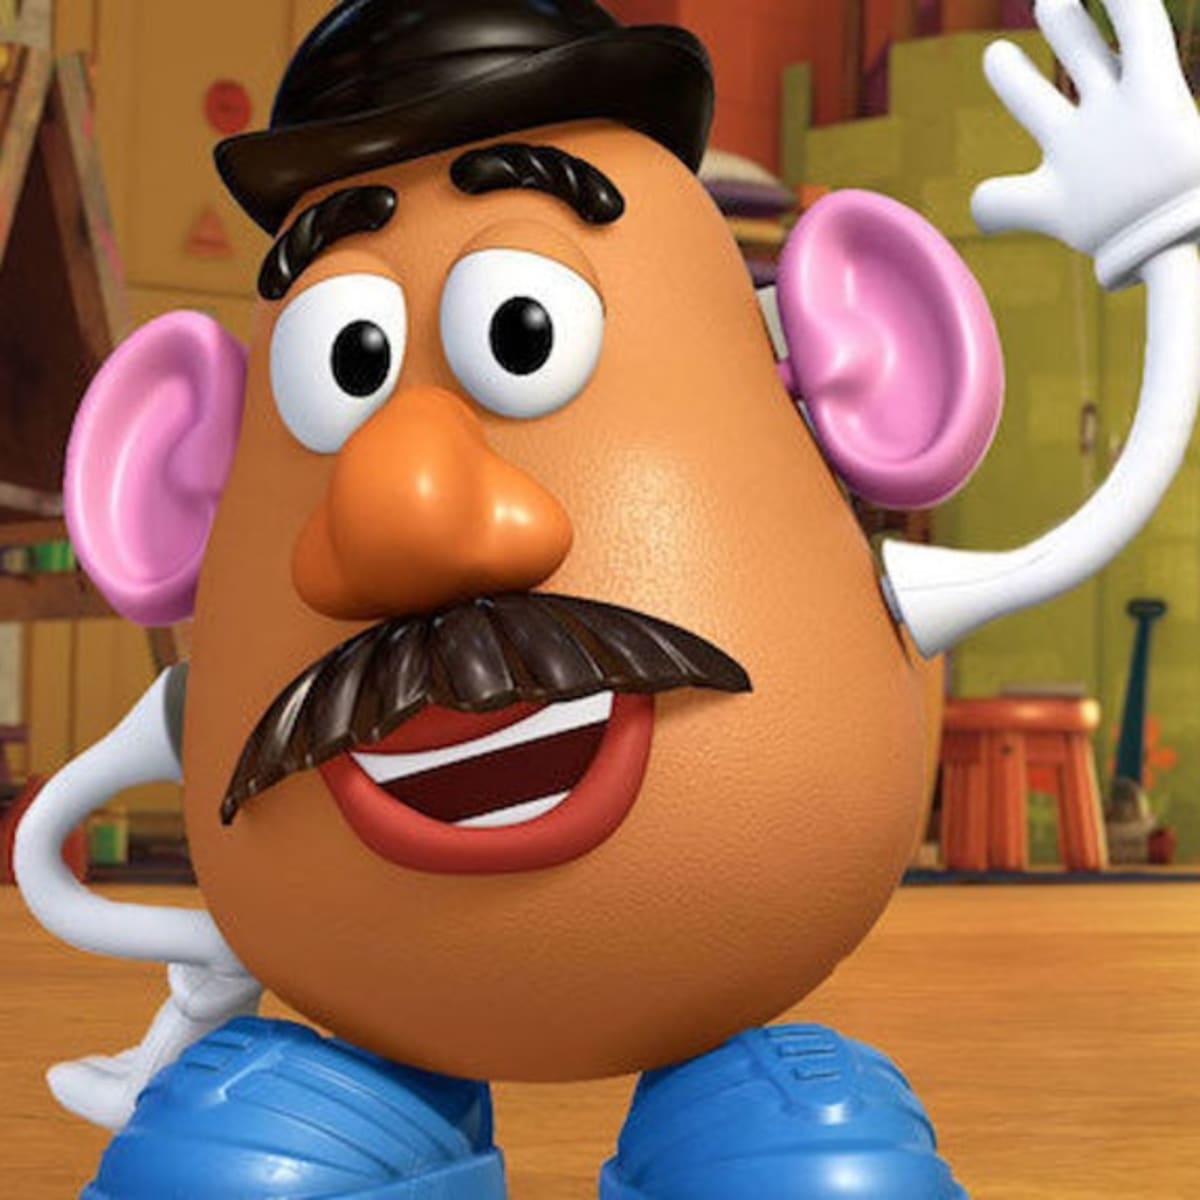 The History of Mr. Potato Head